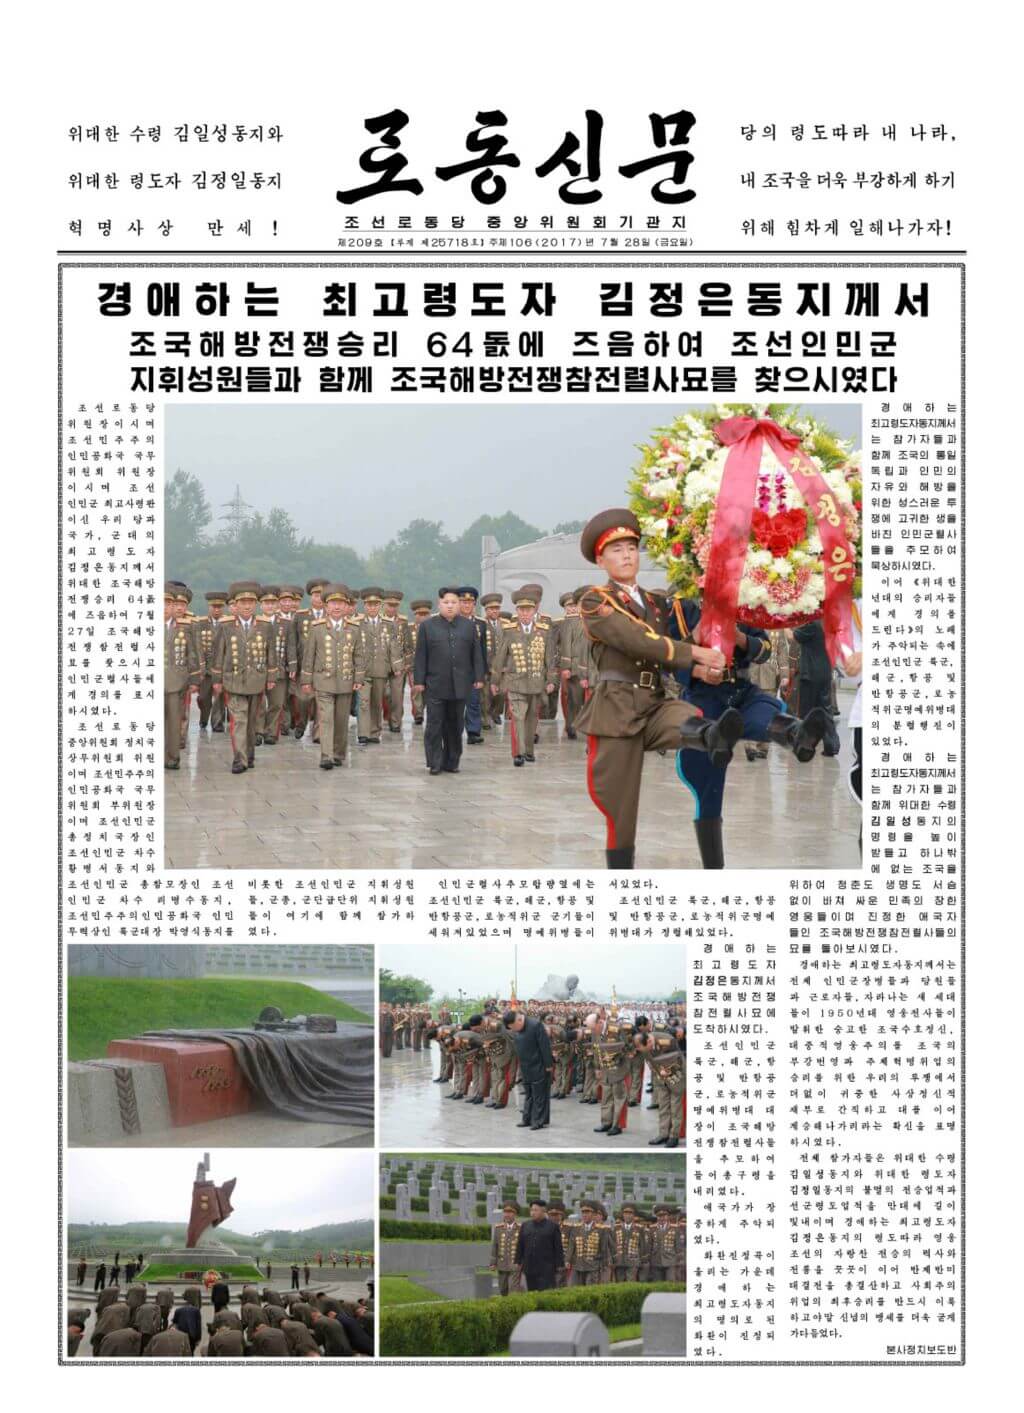 North Korea newspapers 1 Rodong Sinmun